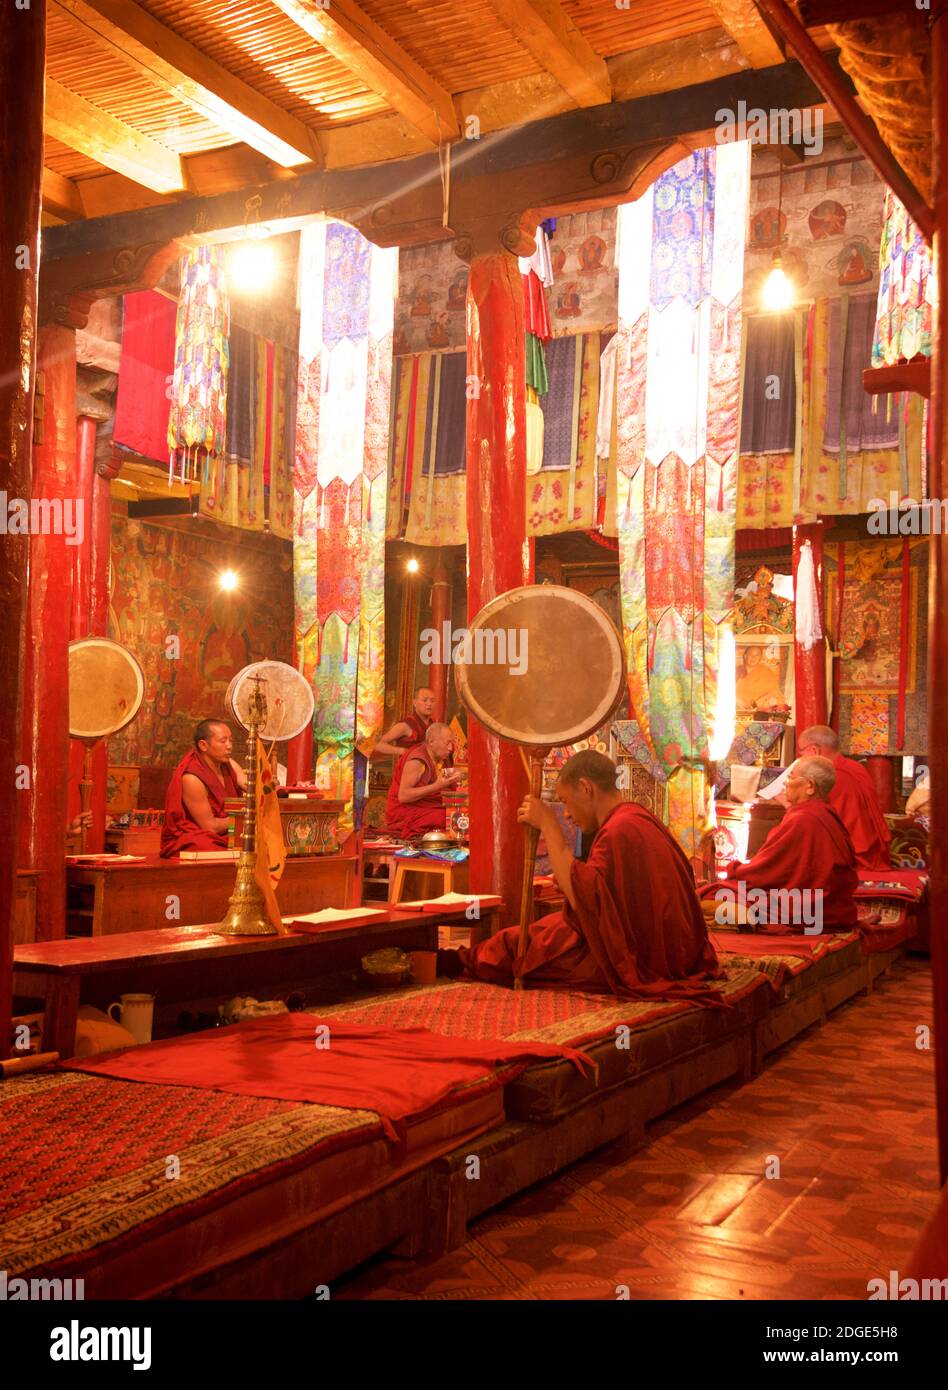 Prayer hall with monks in session, Likir monastery, Ladakh, Jammu and Kashmir, India Stock Photo